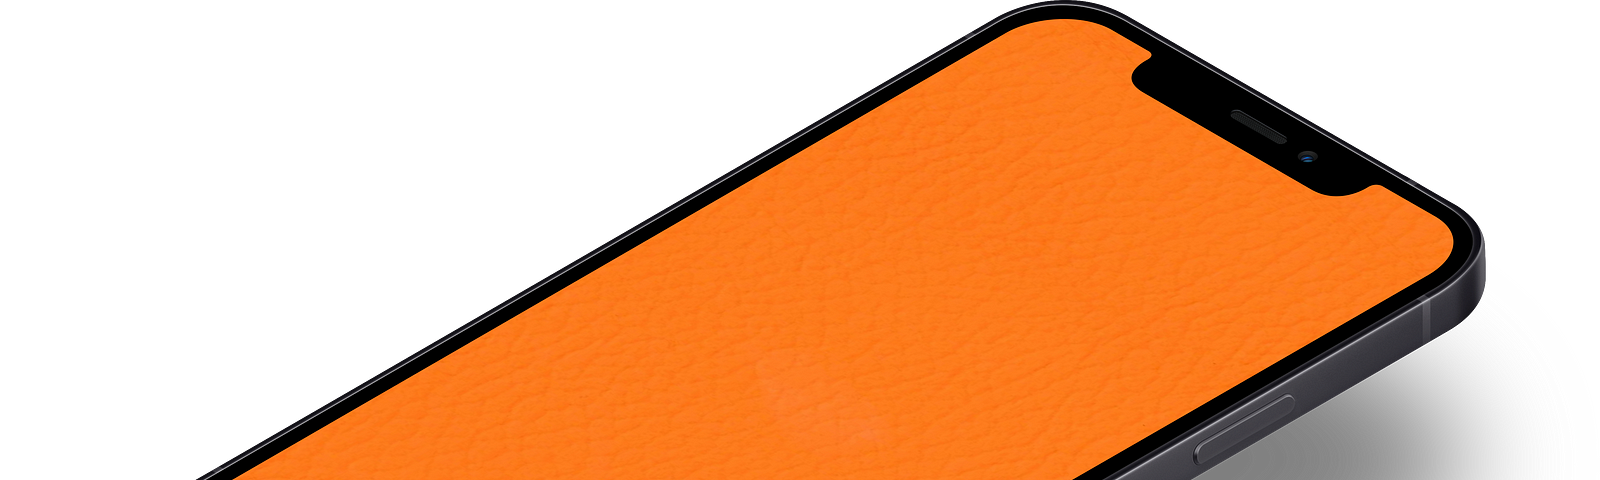 iPhone 13 Pro Max showing orange screen